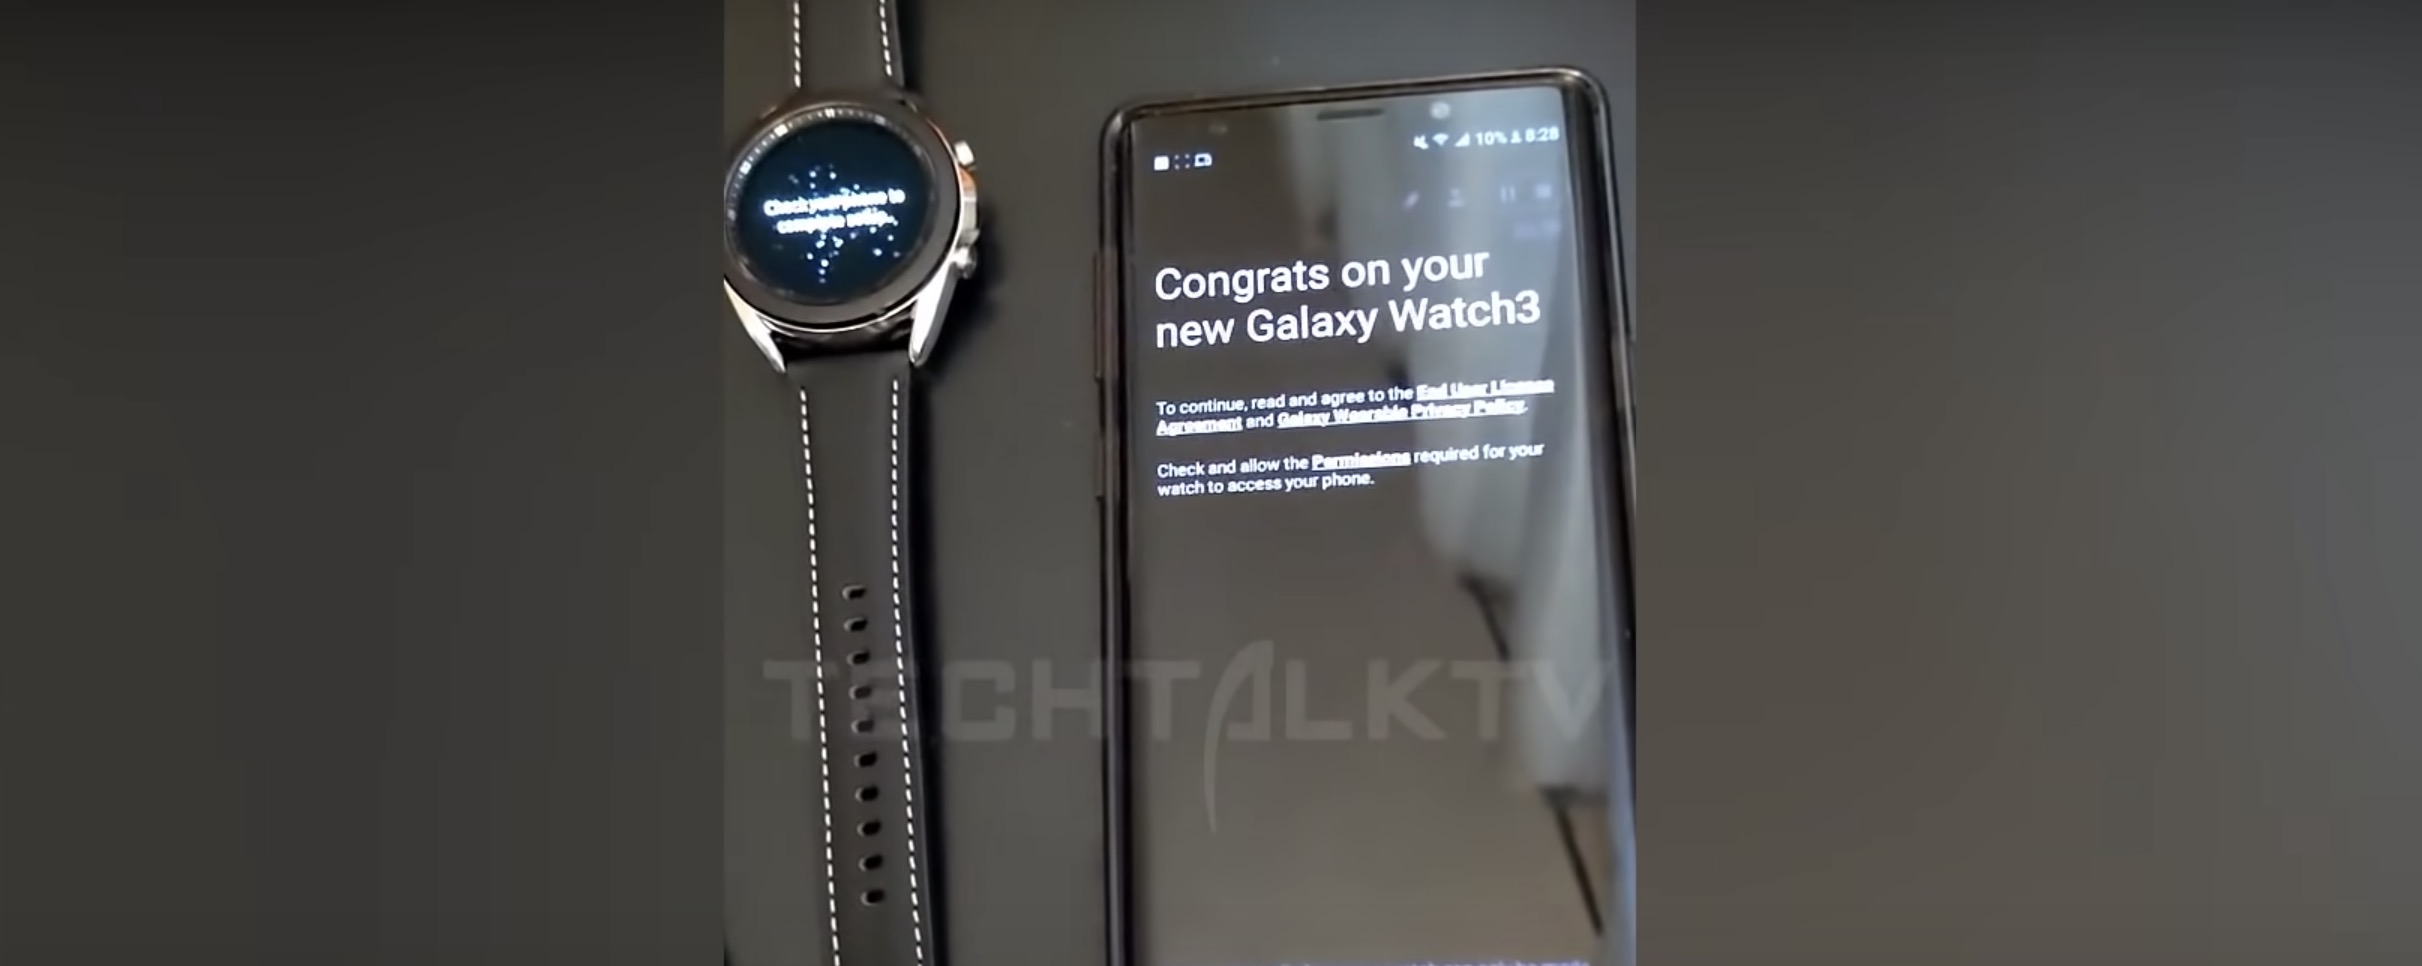 Vídeo do Samsung Galaxy Watch 3 confirma recursos do smartwatch – [Blog GigaOutlet]